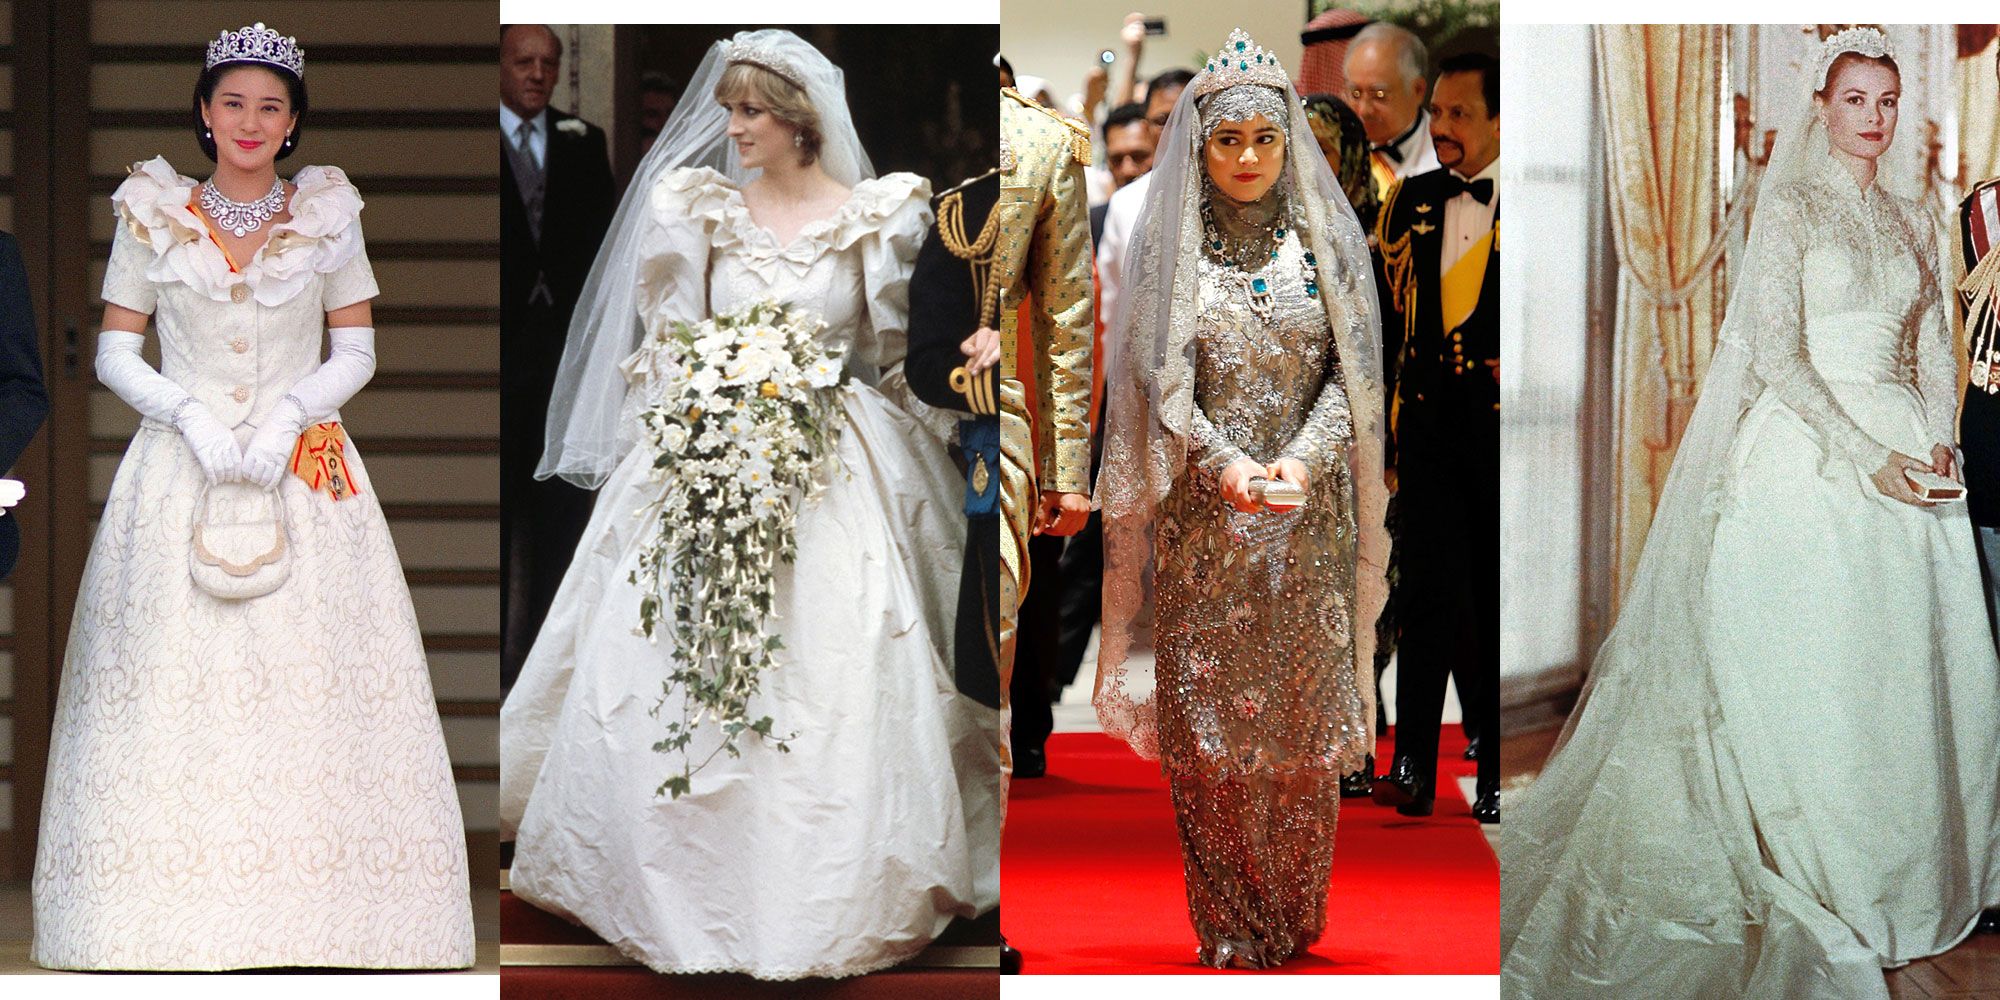 the royal wedding dressesimage